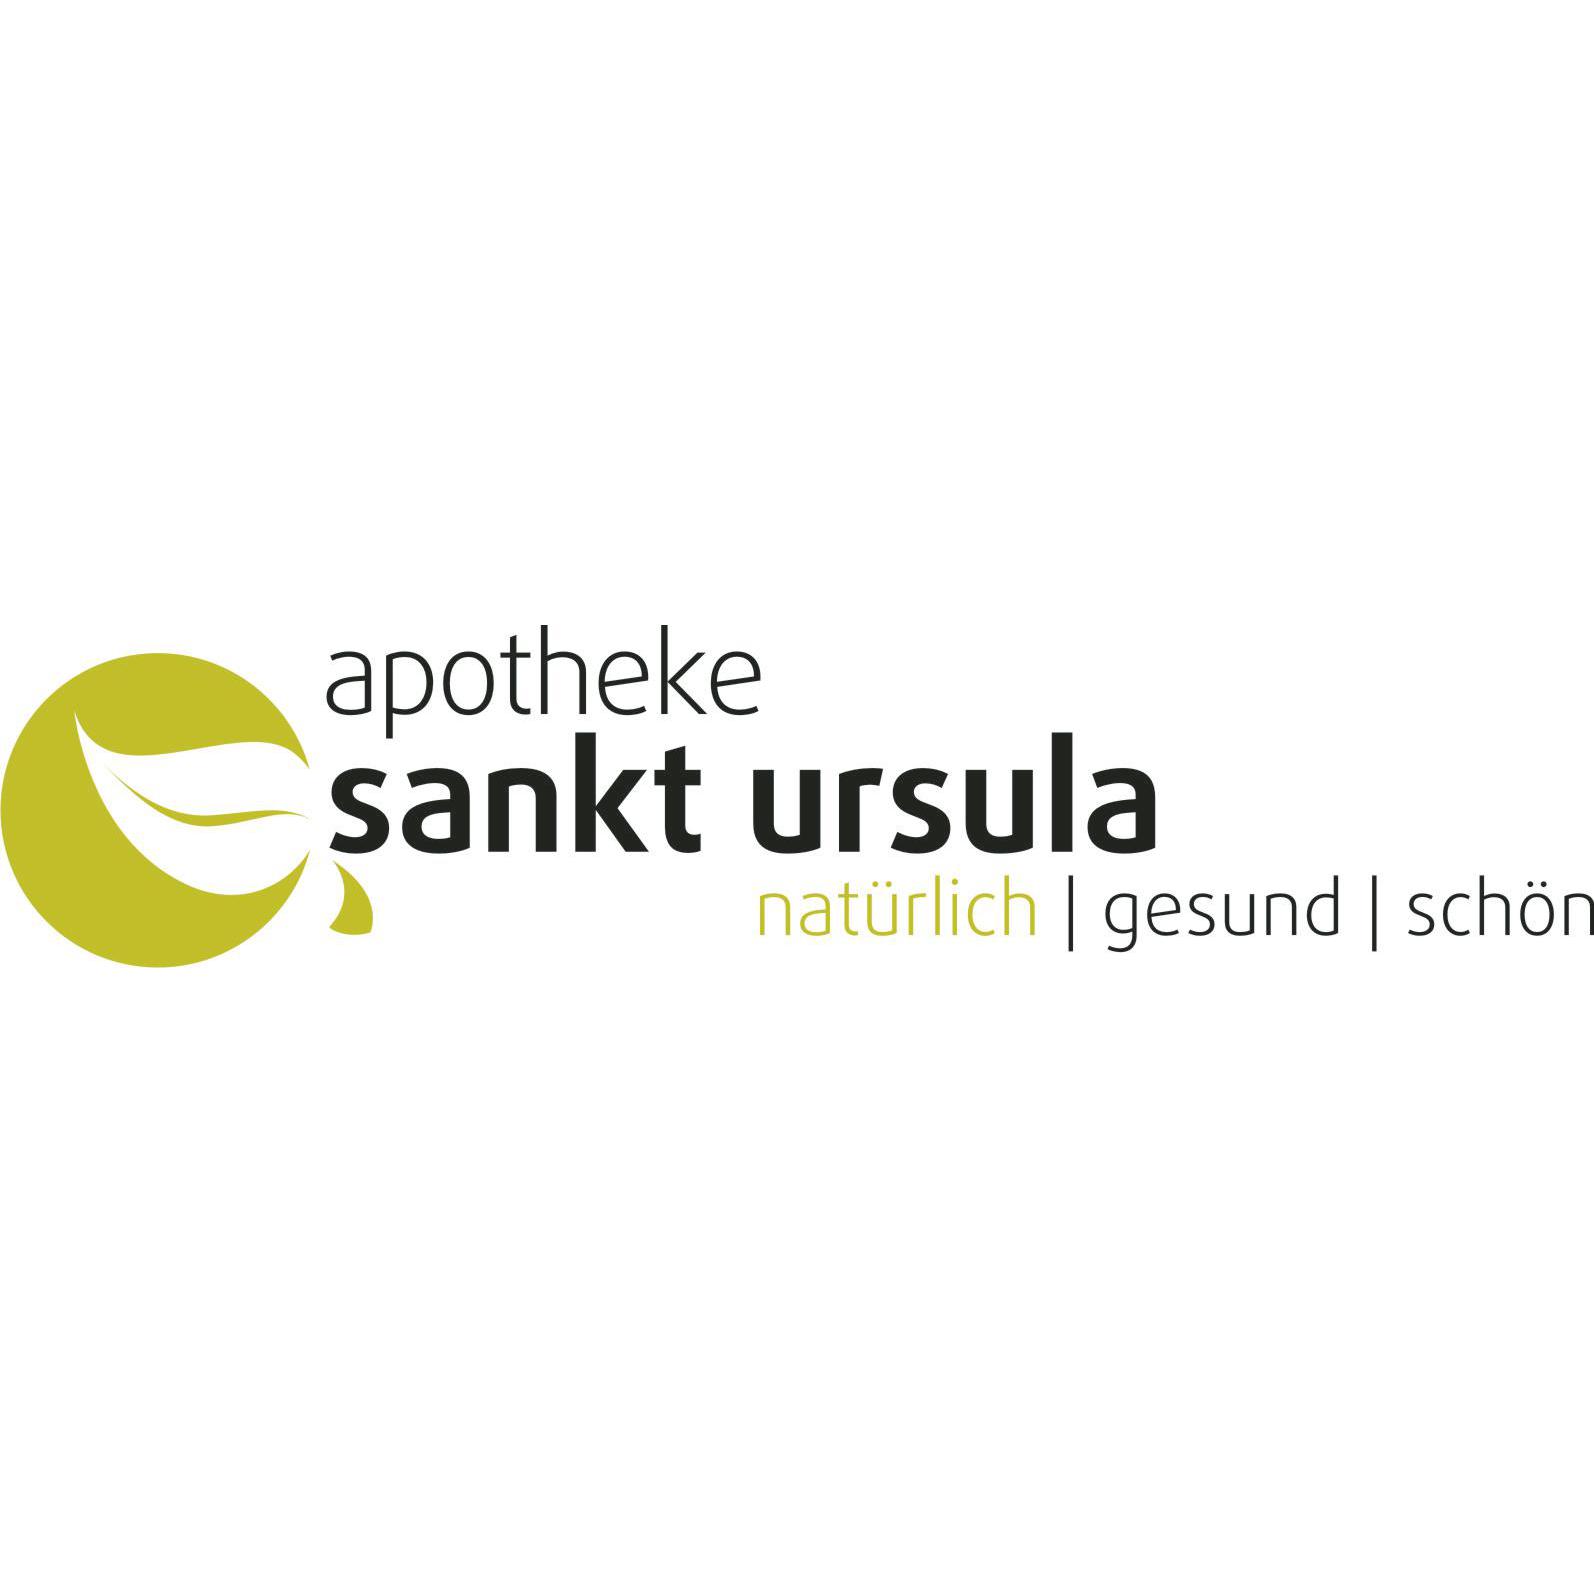 St. Ursula-Apotheke in München - Logo